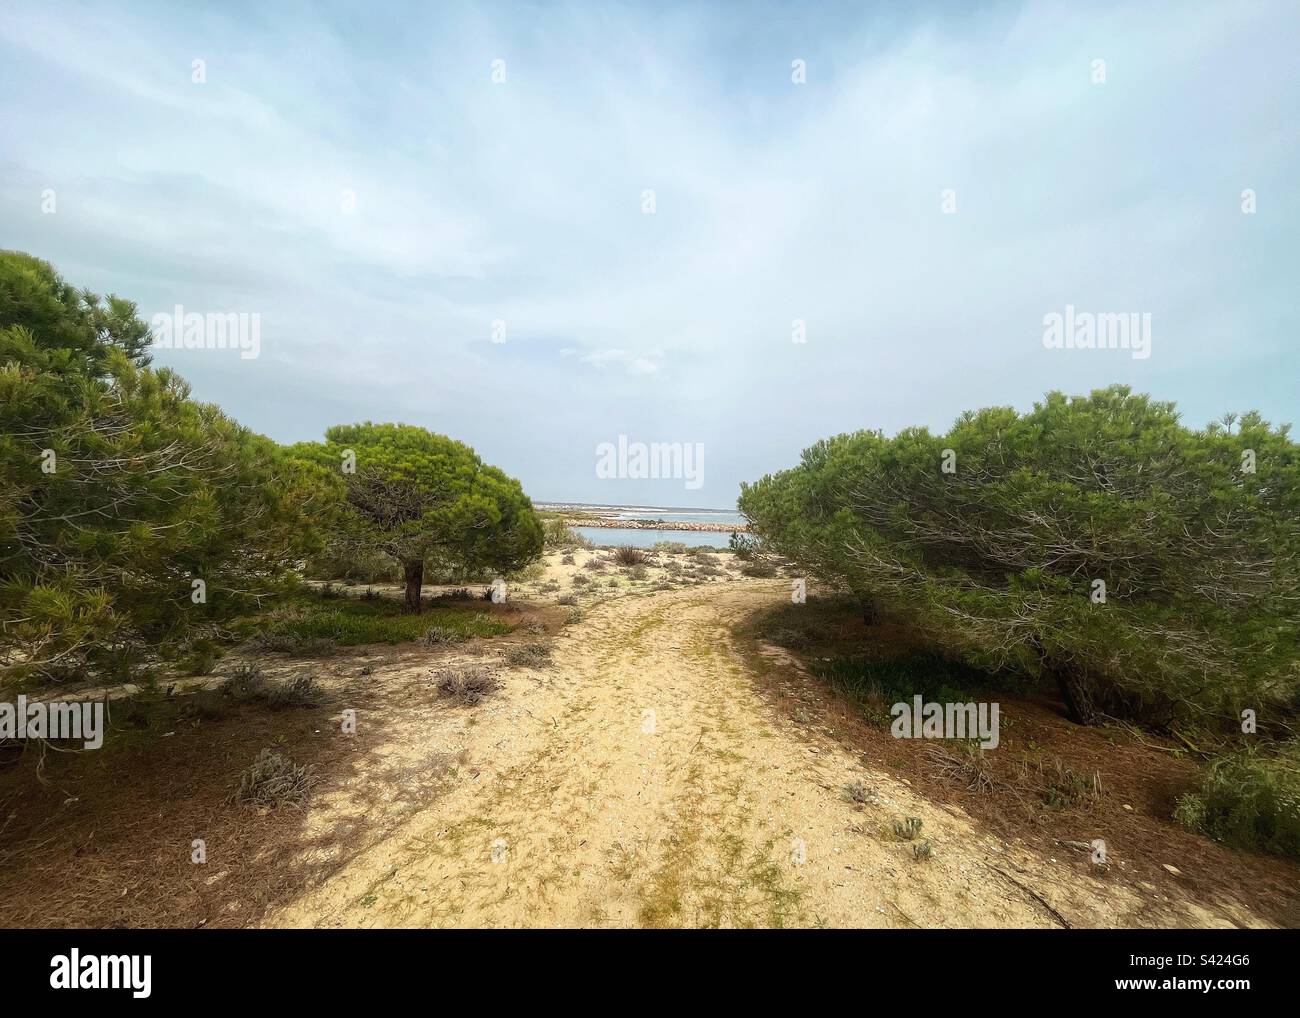 Pinus pinea, stone or umbrella pine trees on the Ilha de Tavira an island on the Portuguese coastline - one of the sand bars in the Ria Formosa national park Stock Photo